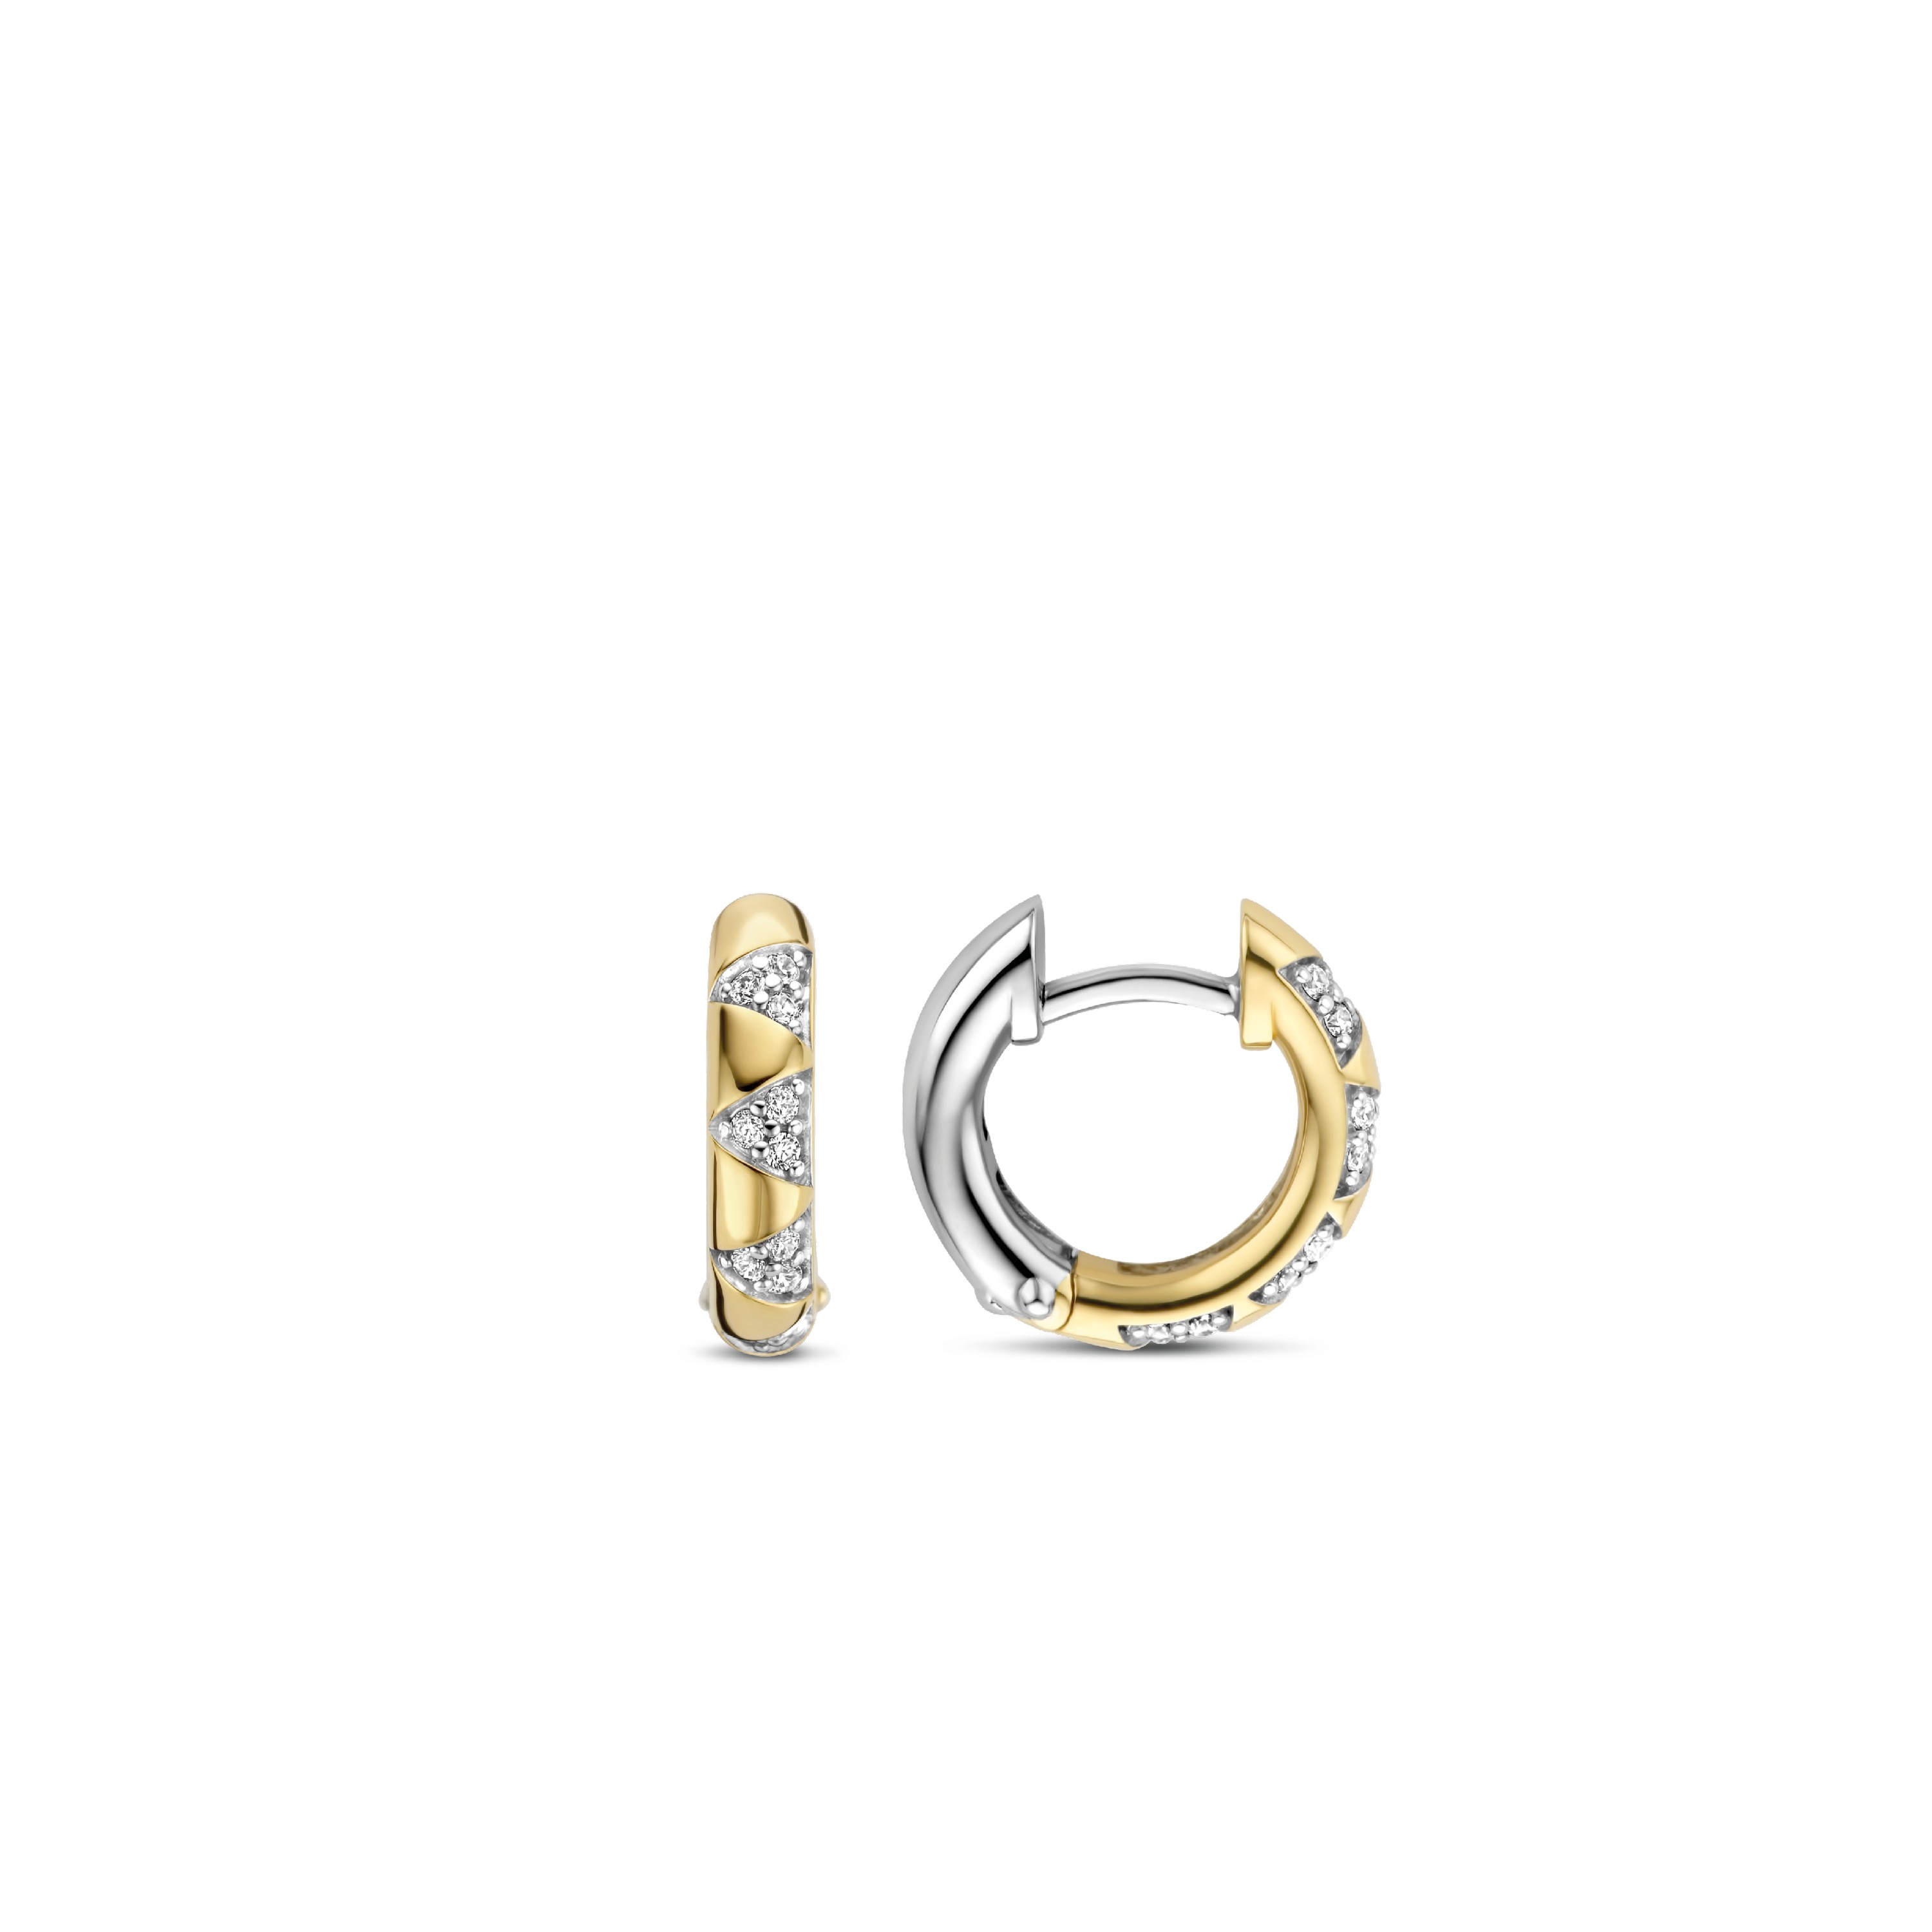 TI SENTO - Milano Earrings 7838ZY Image 2 Gala Jewelers Inc. White Oak, PA